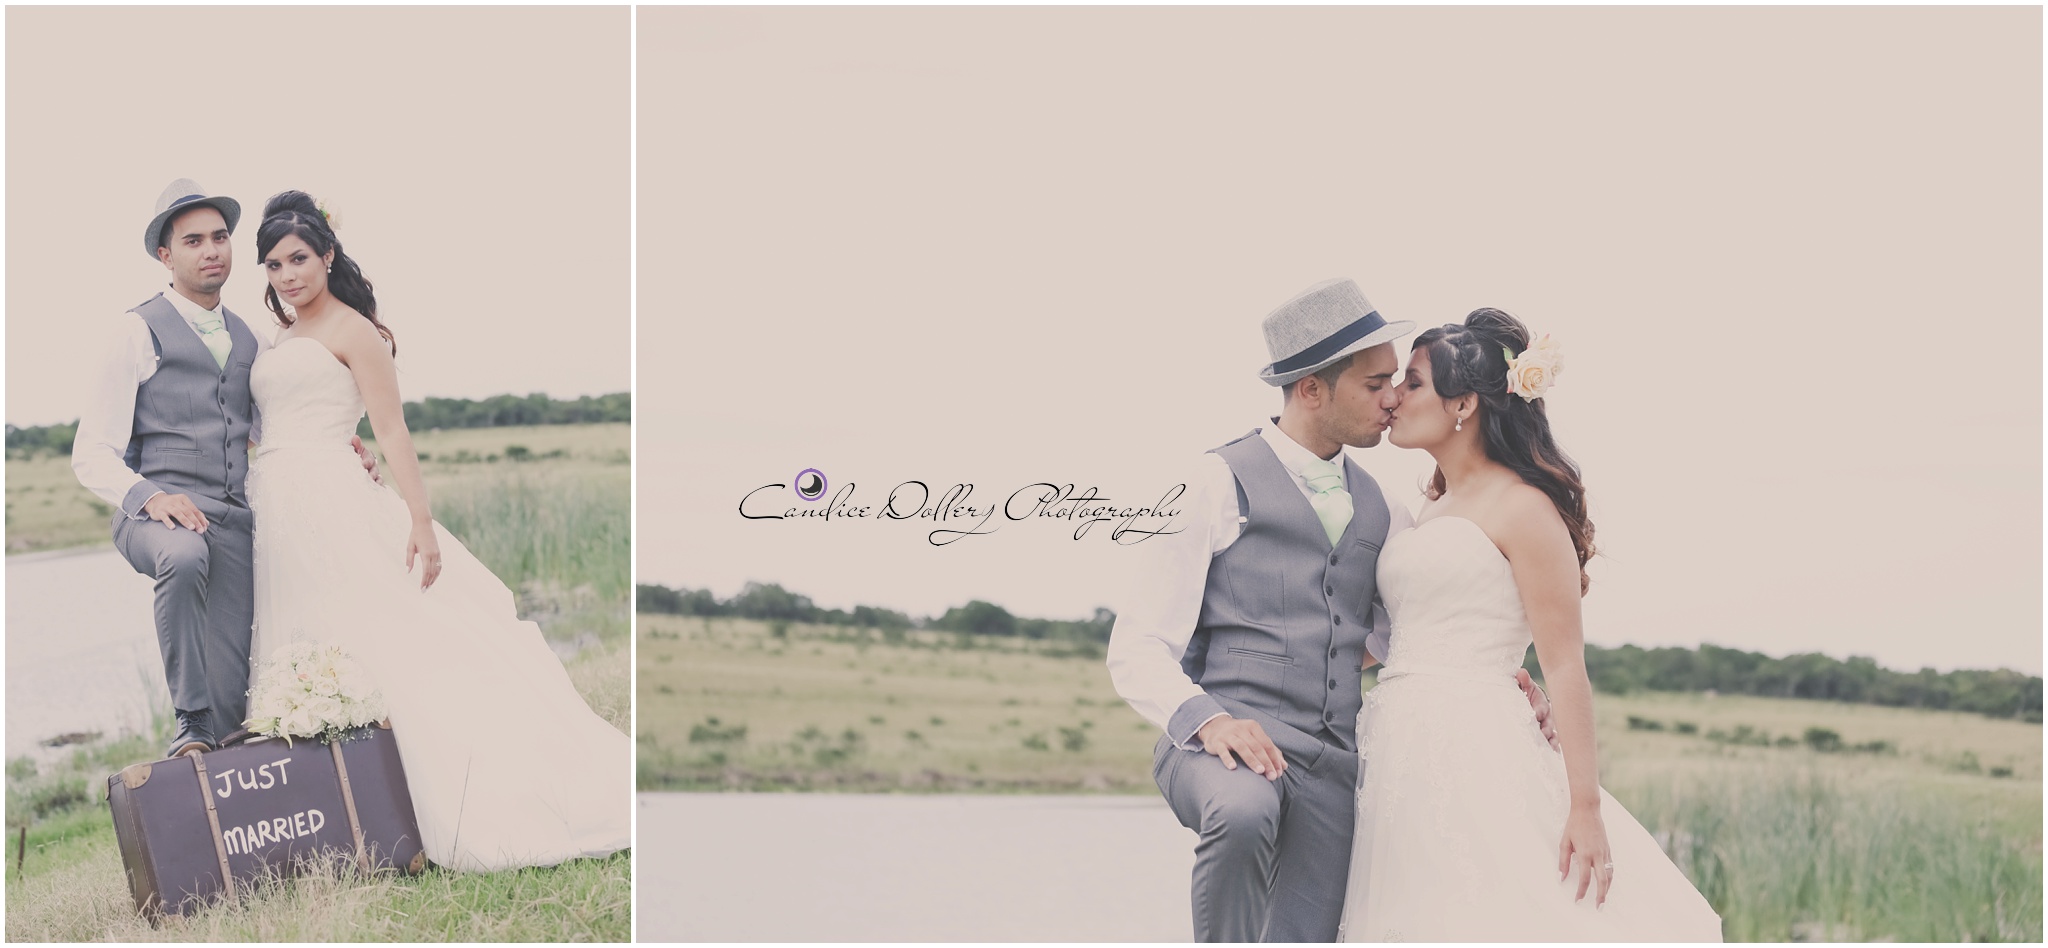 Paula & Jaycee's Wedding - Cypress Dale - Candice Dollery Photography_3096